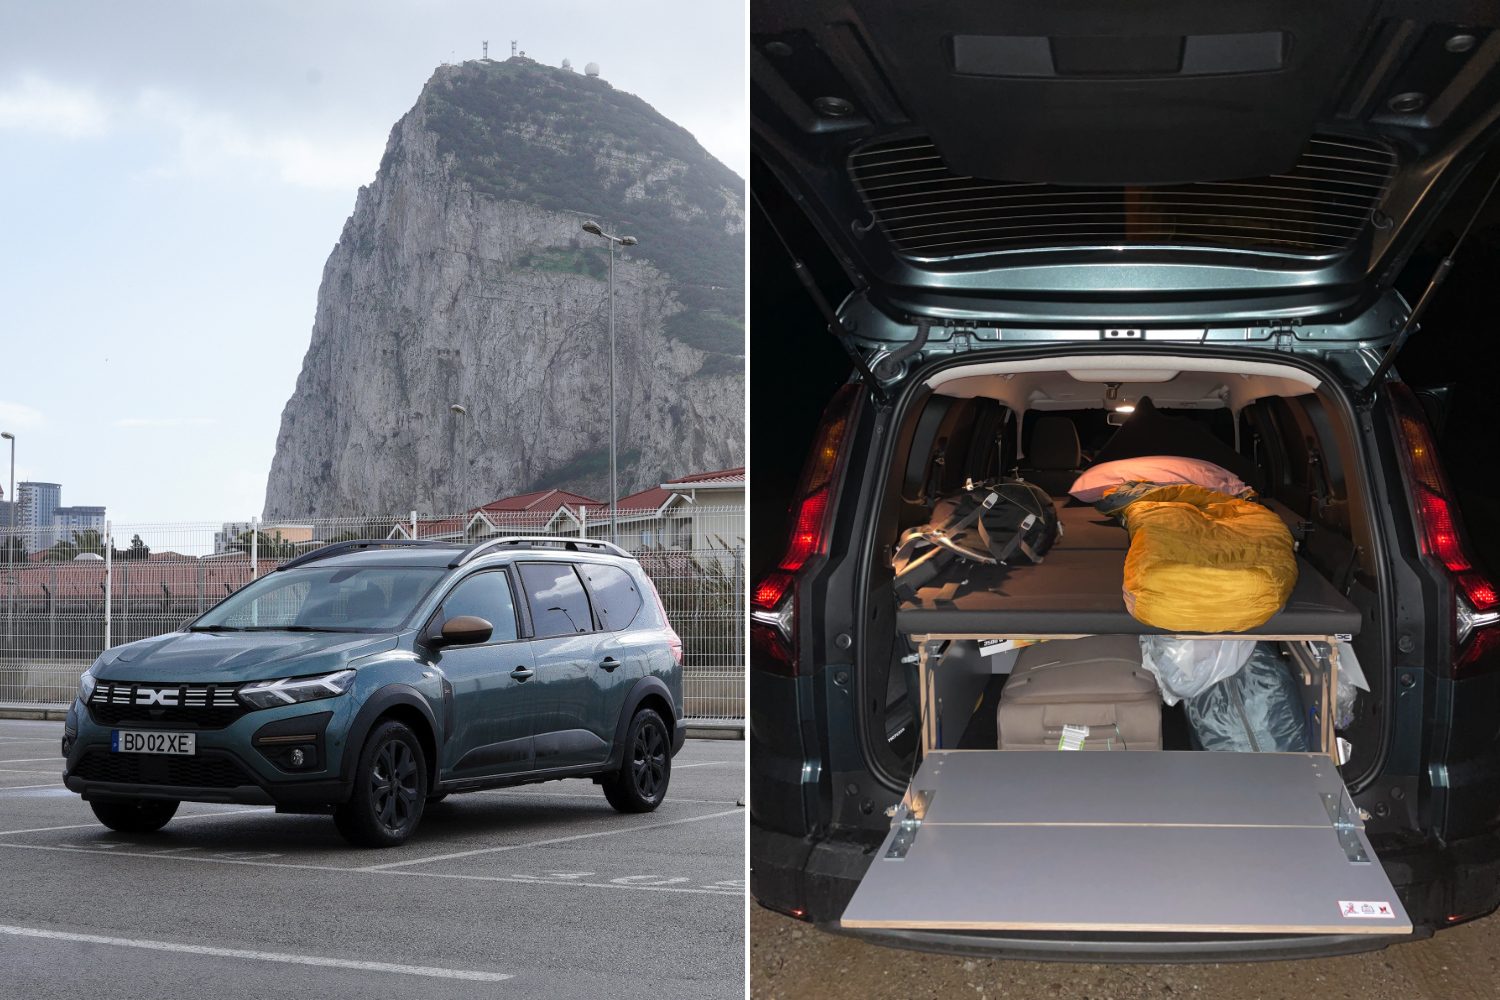 On a dormi 4 nuits dans une Dacia grâce au « Pack Sleep » : rêve